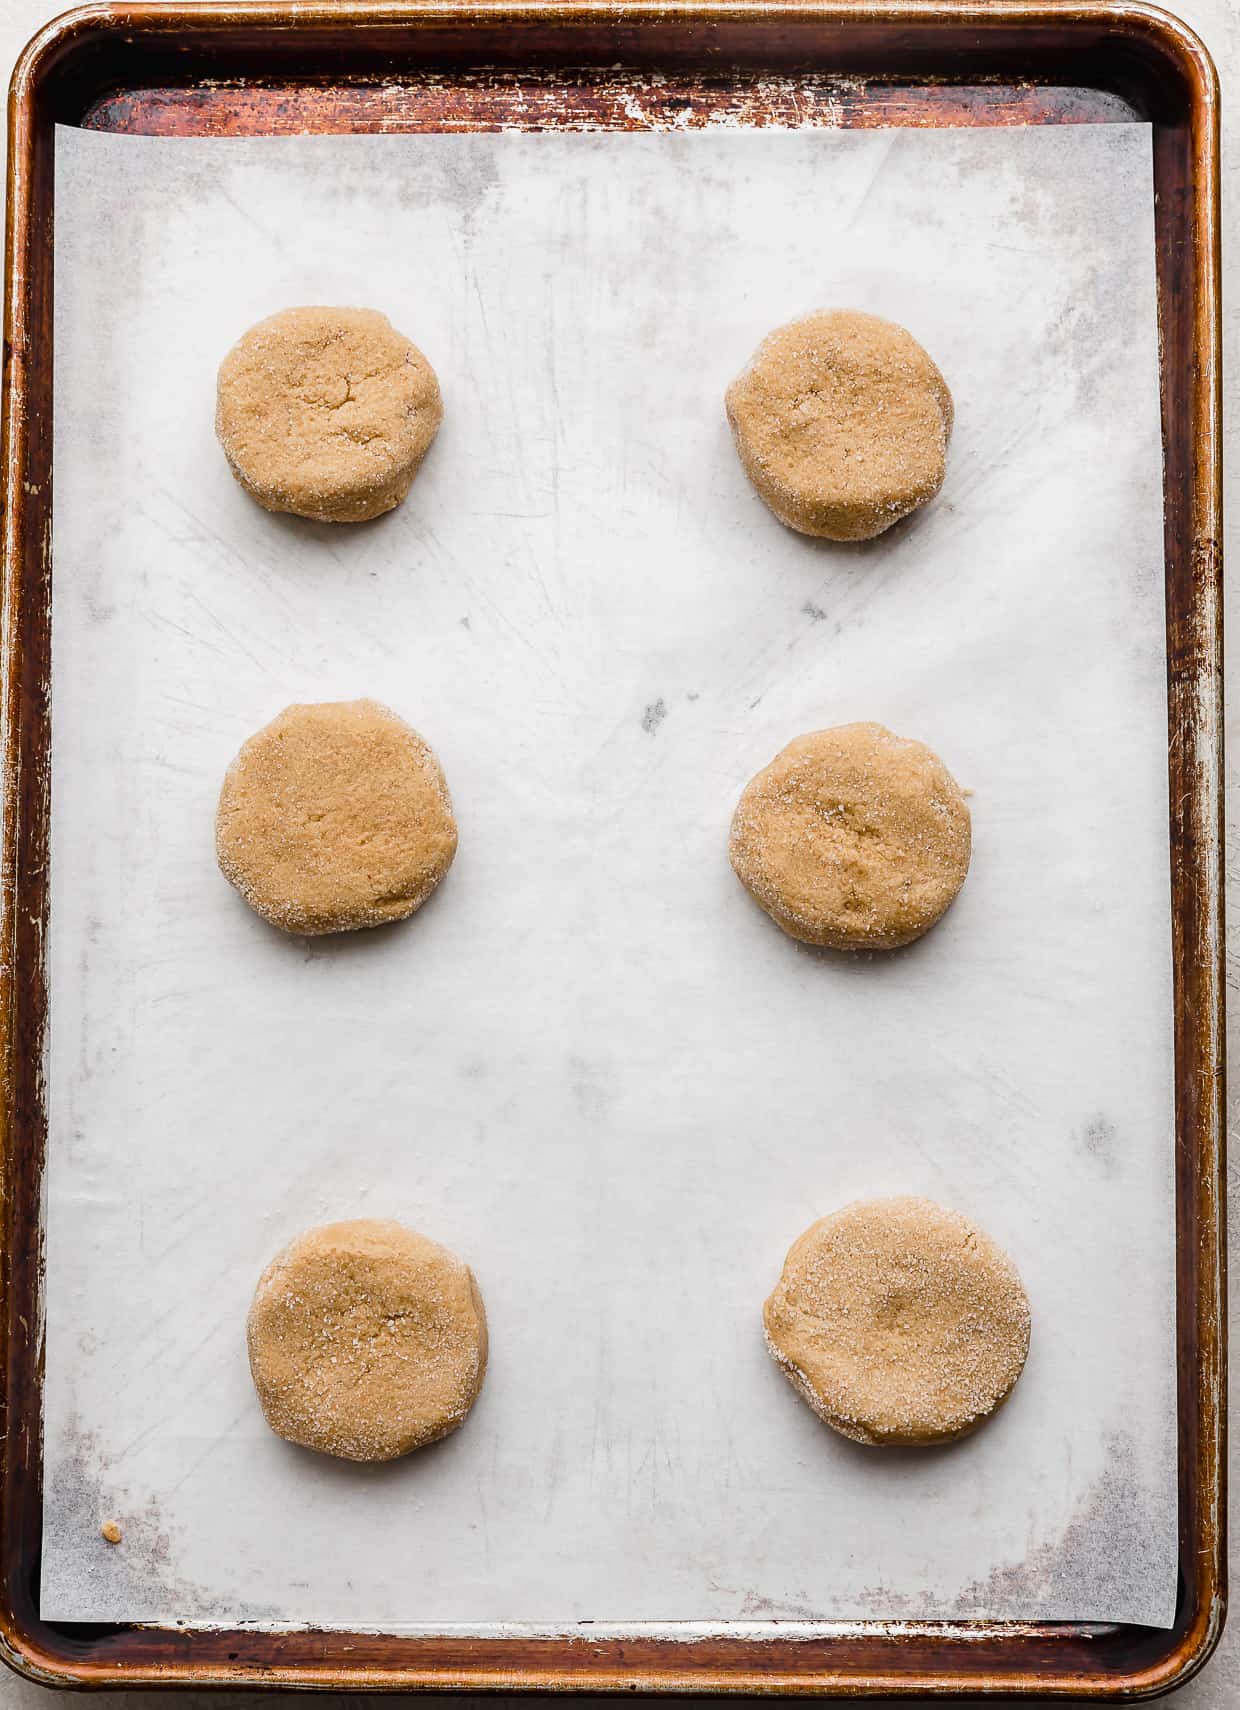 Six peanut butter cookie dough balls on a parchment lined baking sheet.